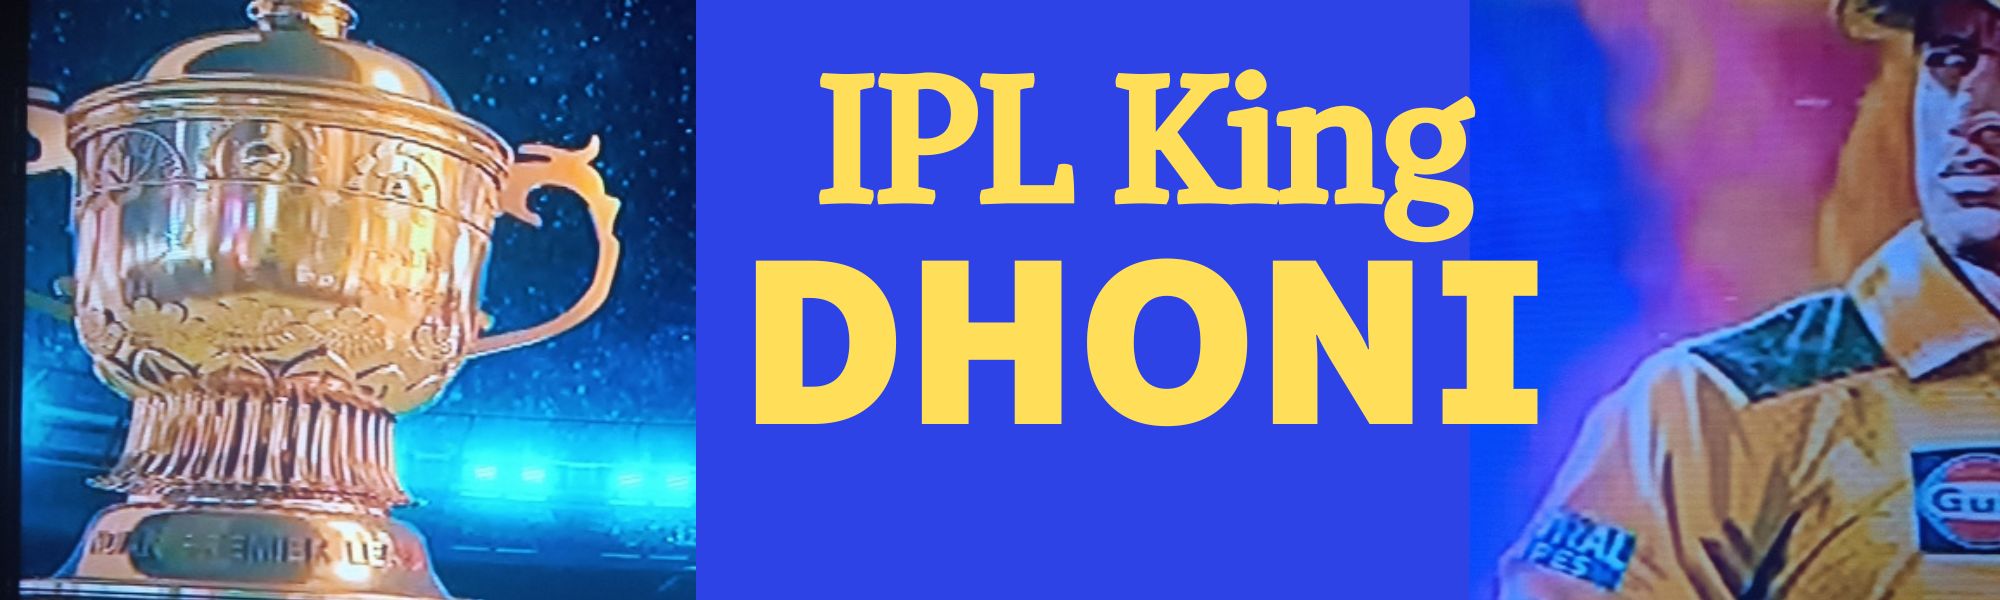 dhoni-king-of-ipl